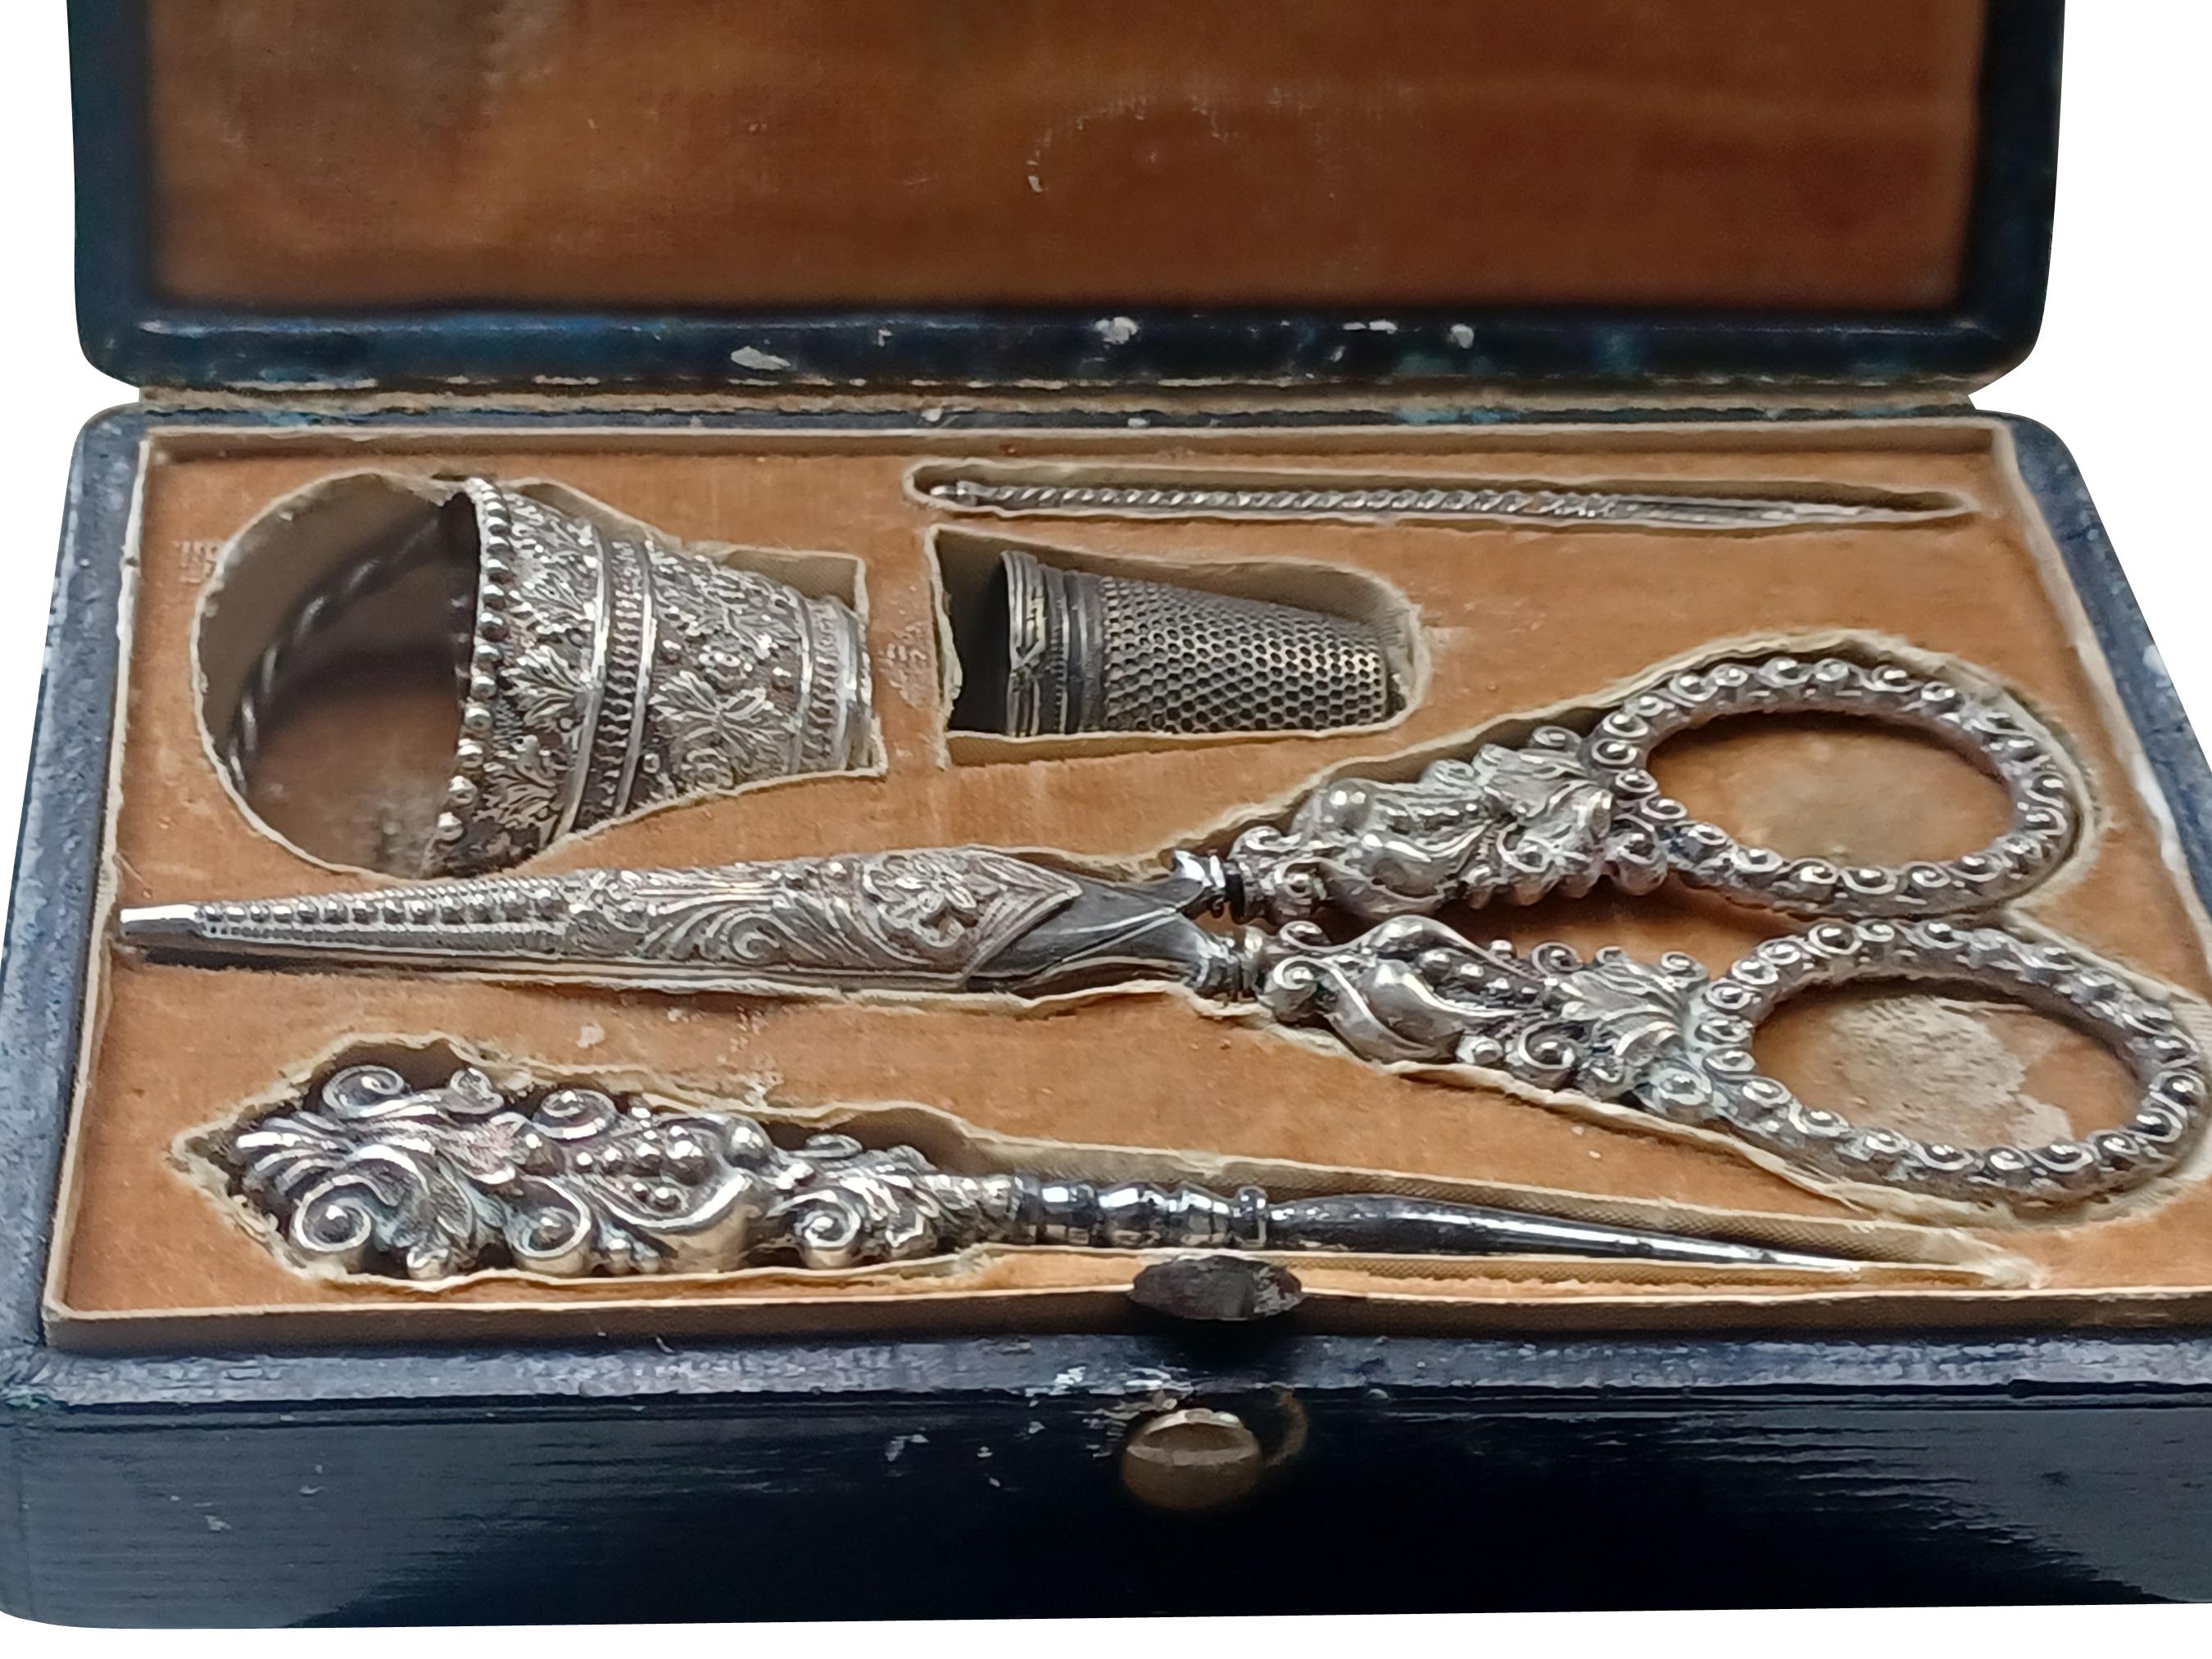 Rare Antique George IV Lady’s Sewing Necessaire with Original Case, est. 1825 For Sale 5